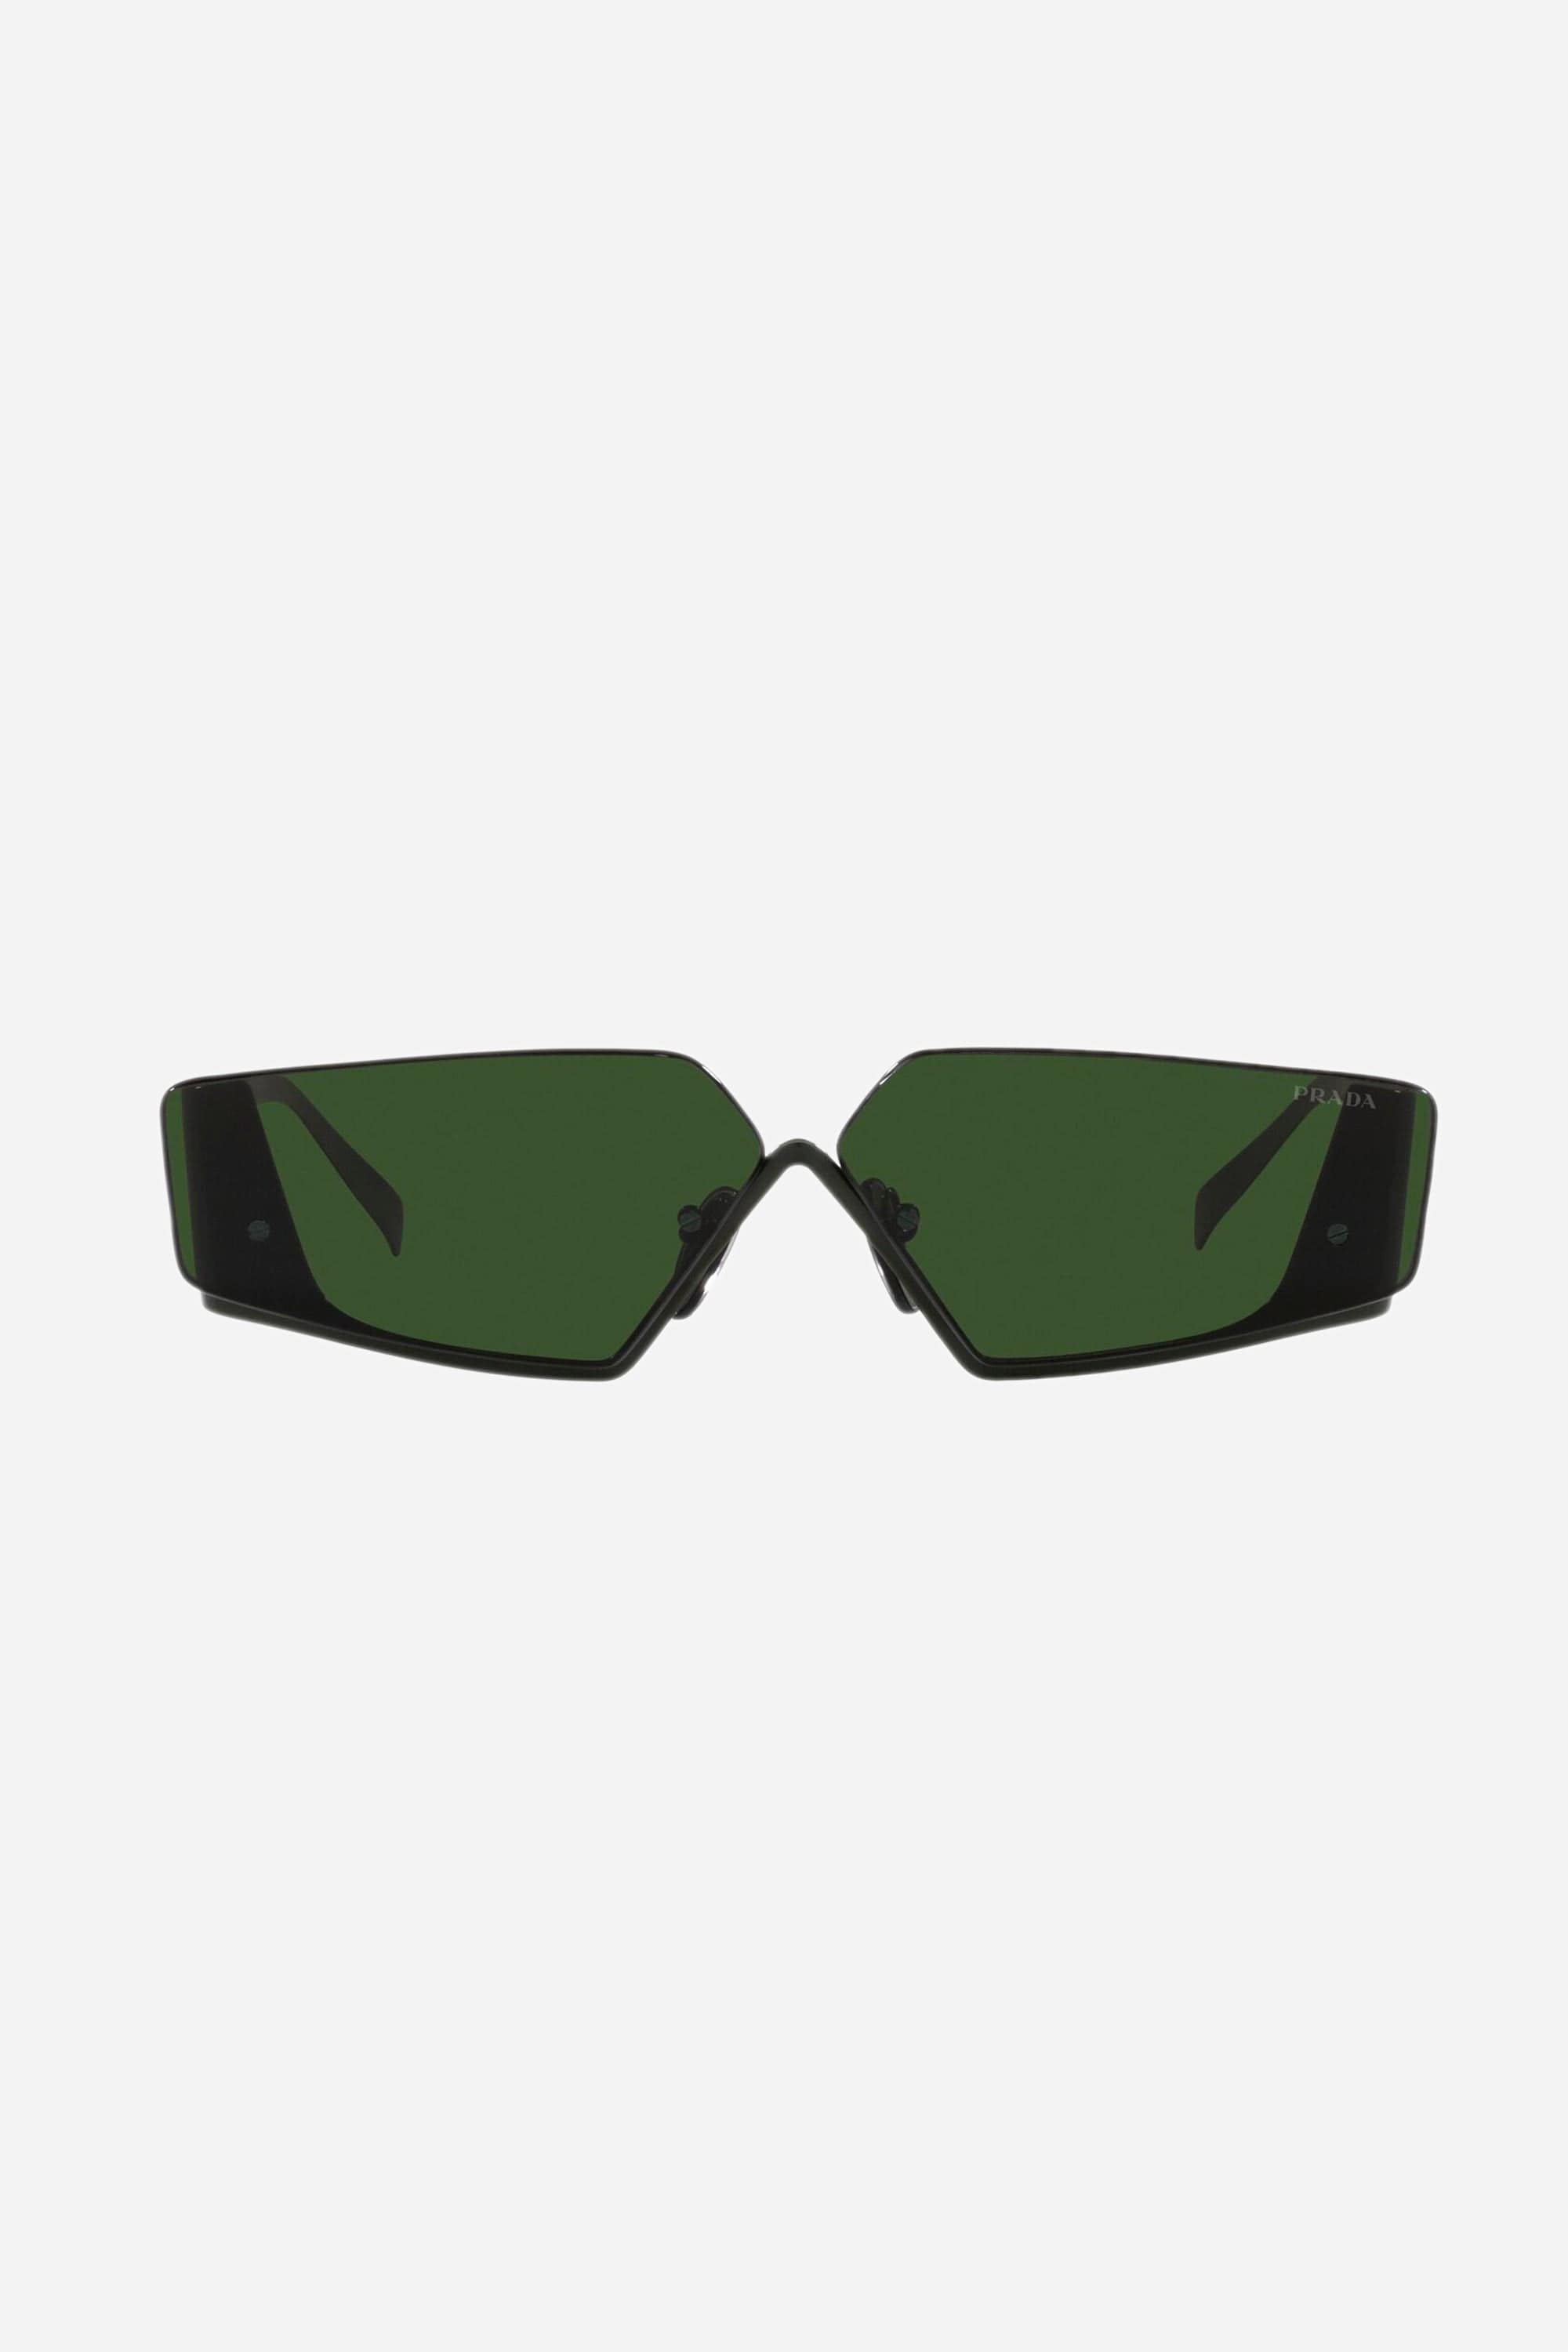 Prada flat top sunglasses man Catwalk - Eyewear Club